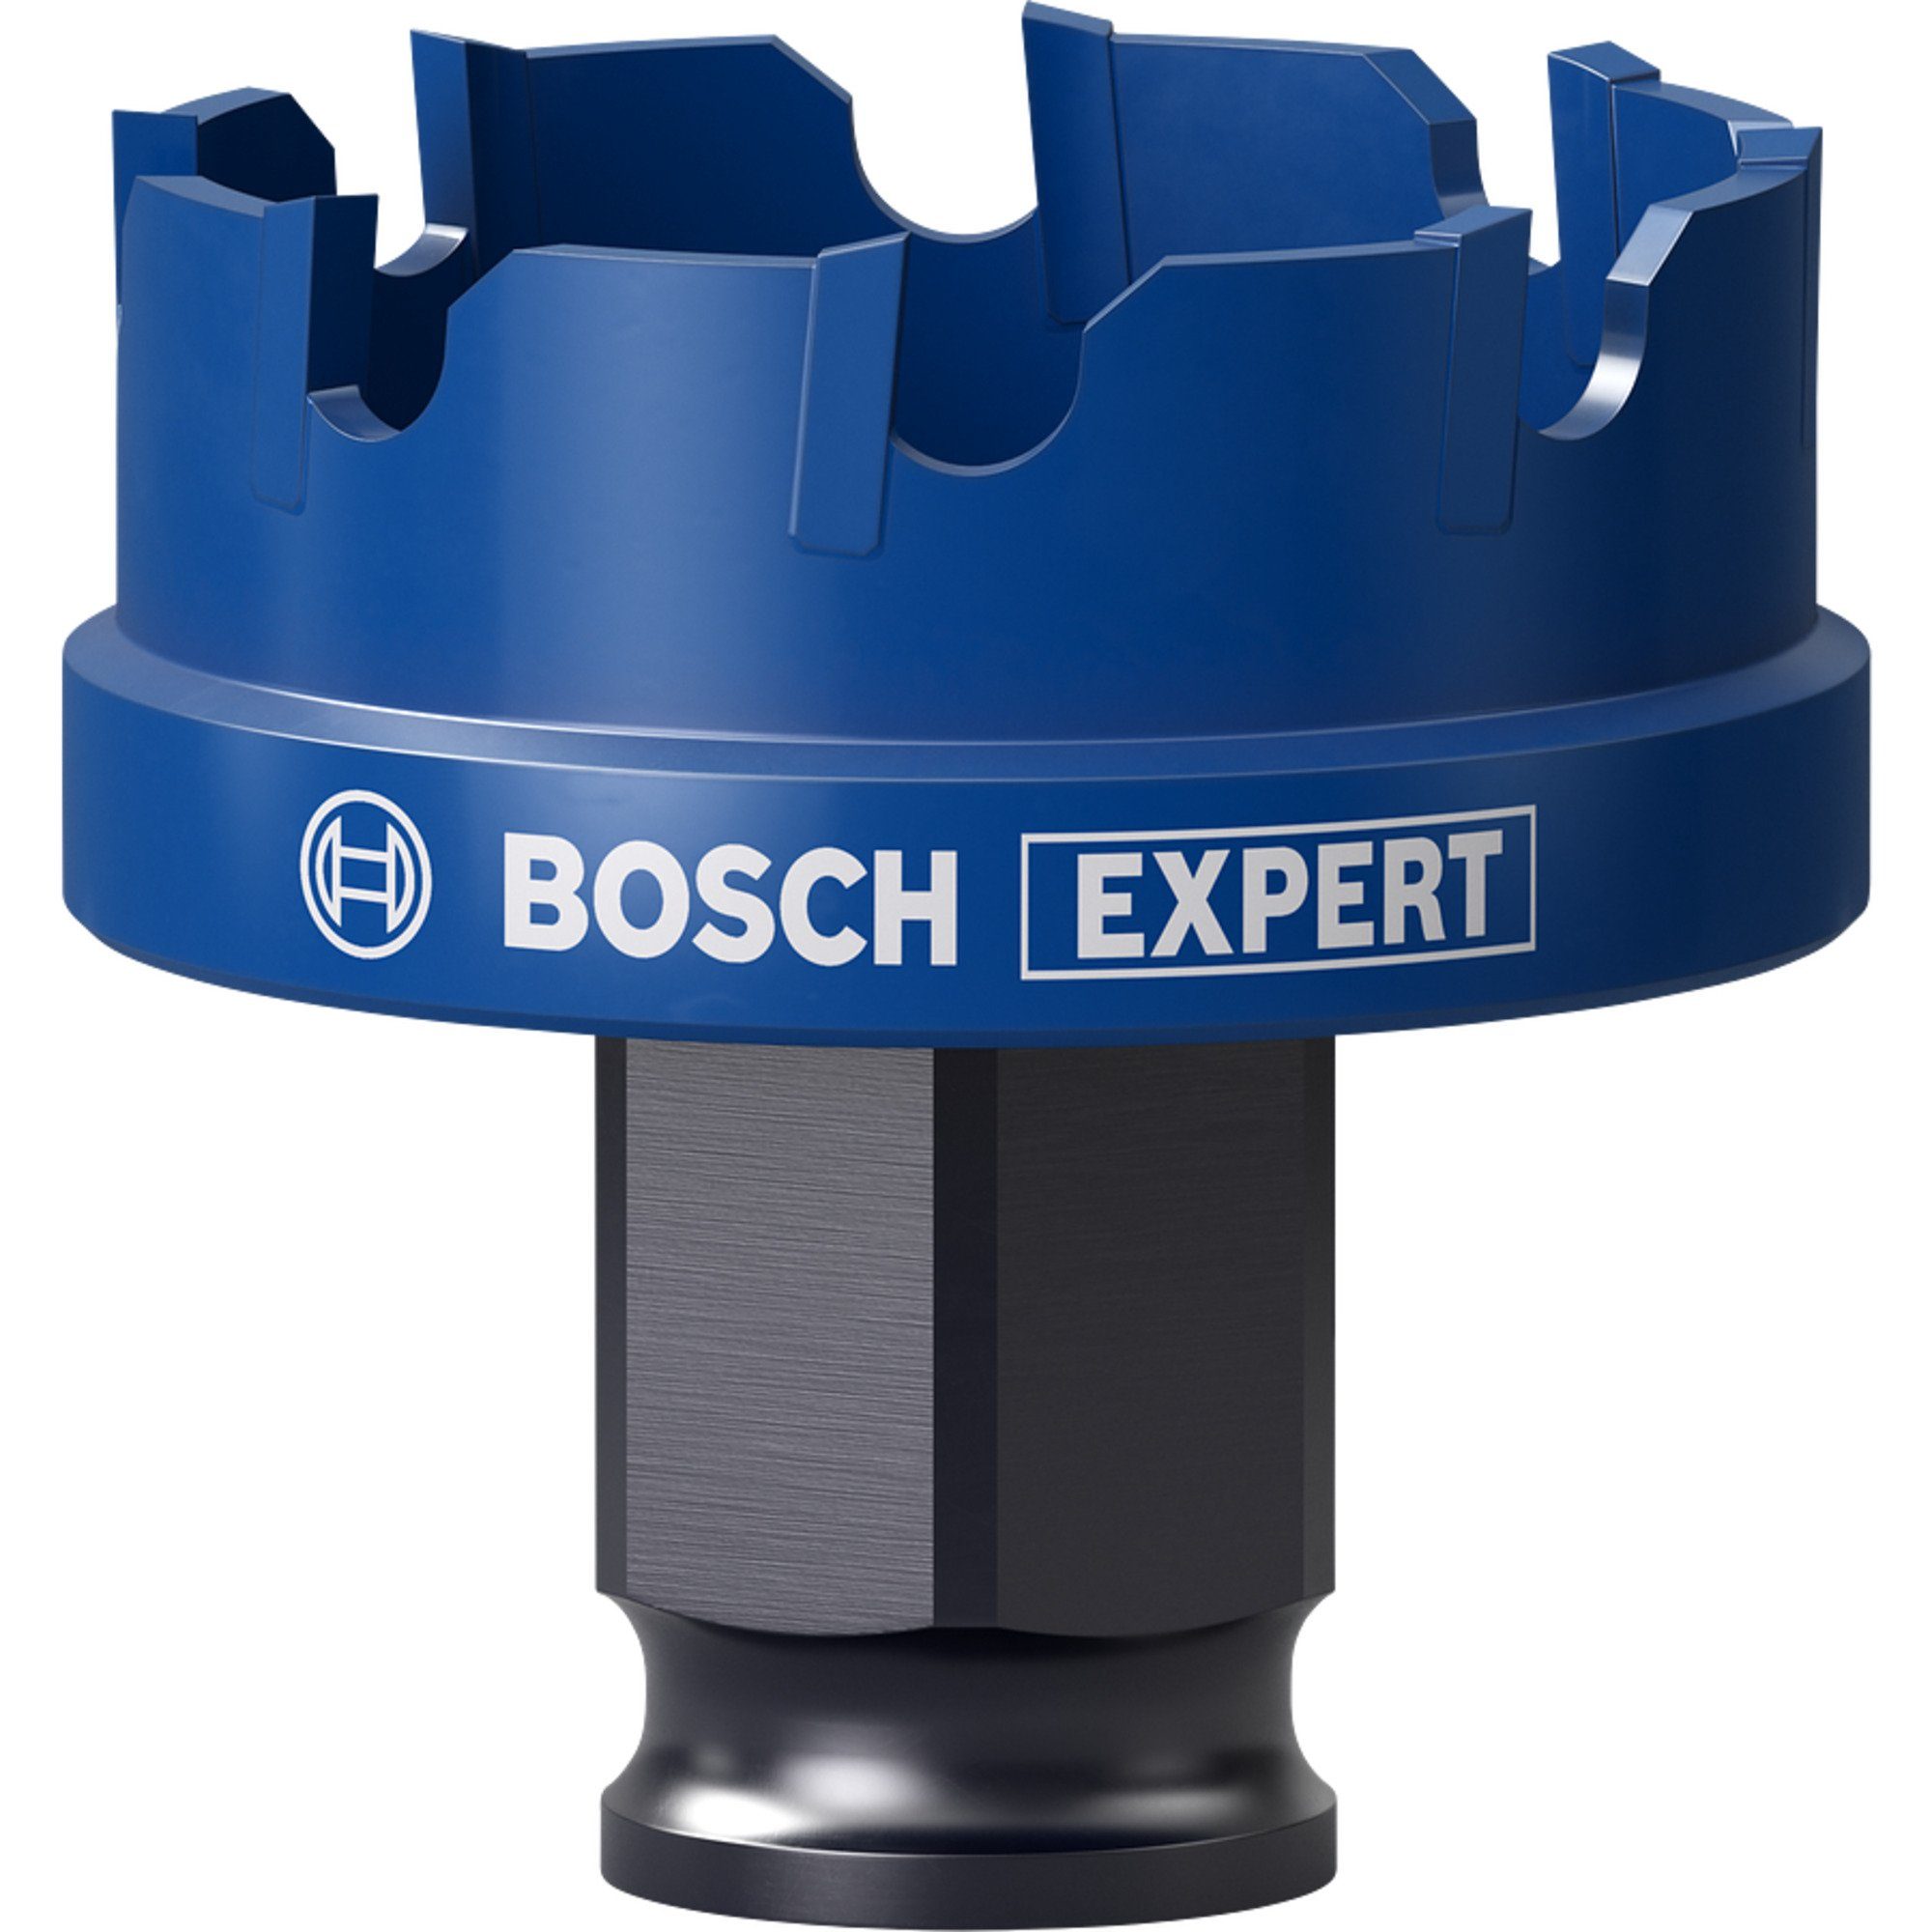 Professional BOSCH Carbide Lochsäge Expert Bosch Sägeblatt